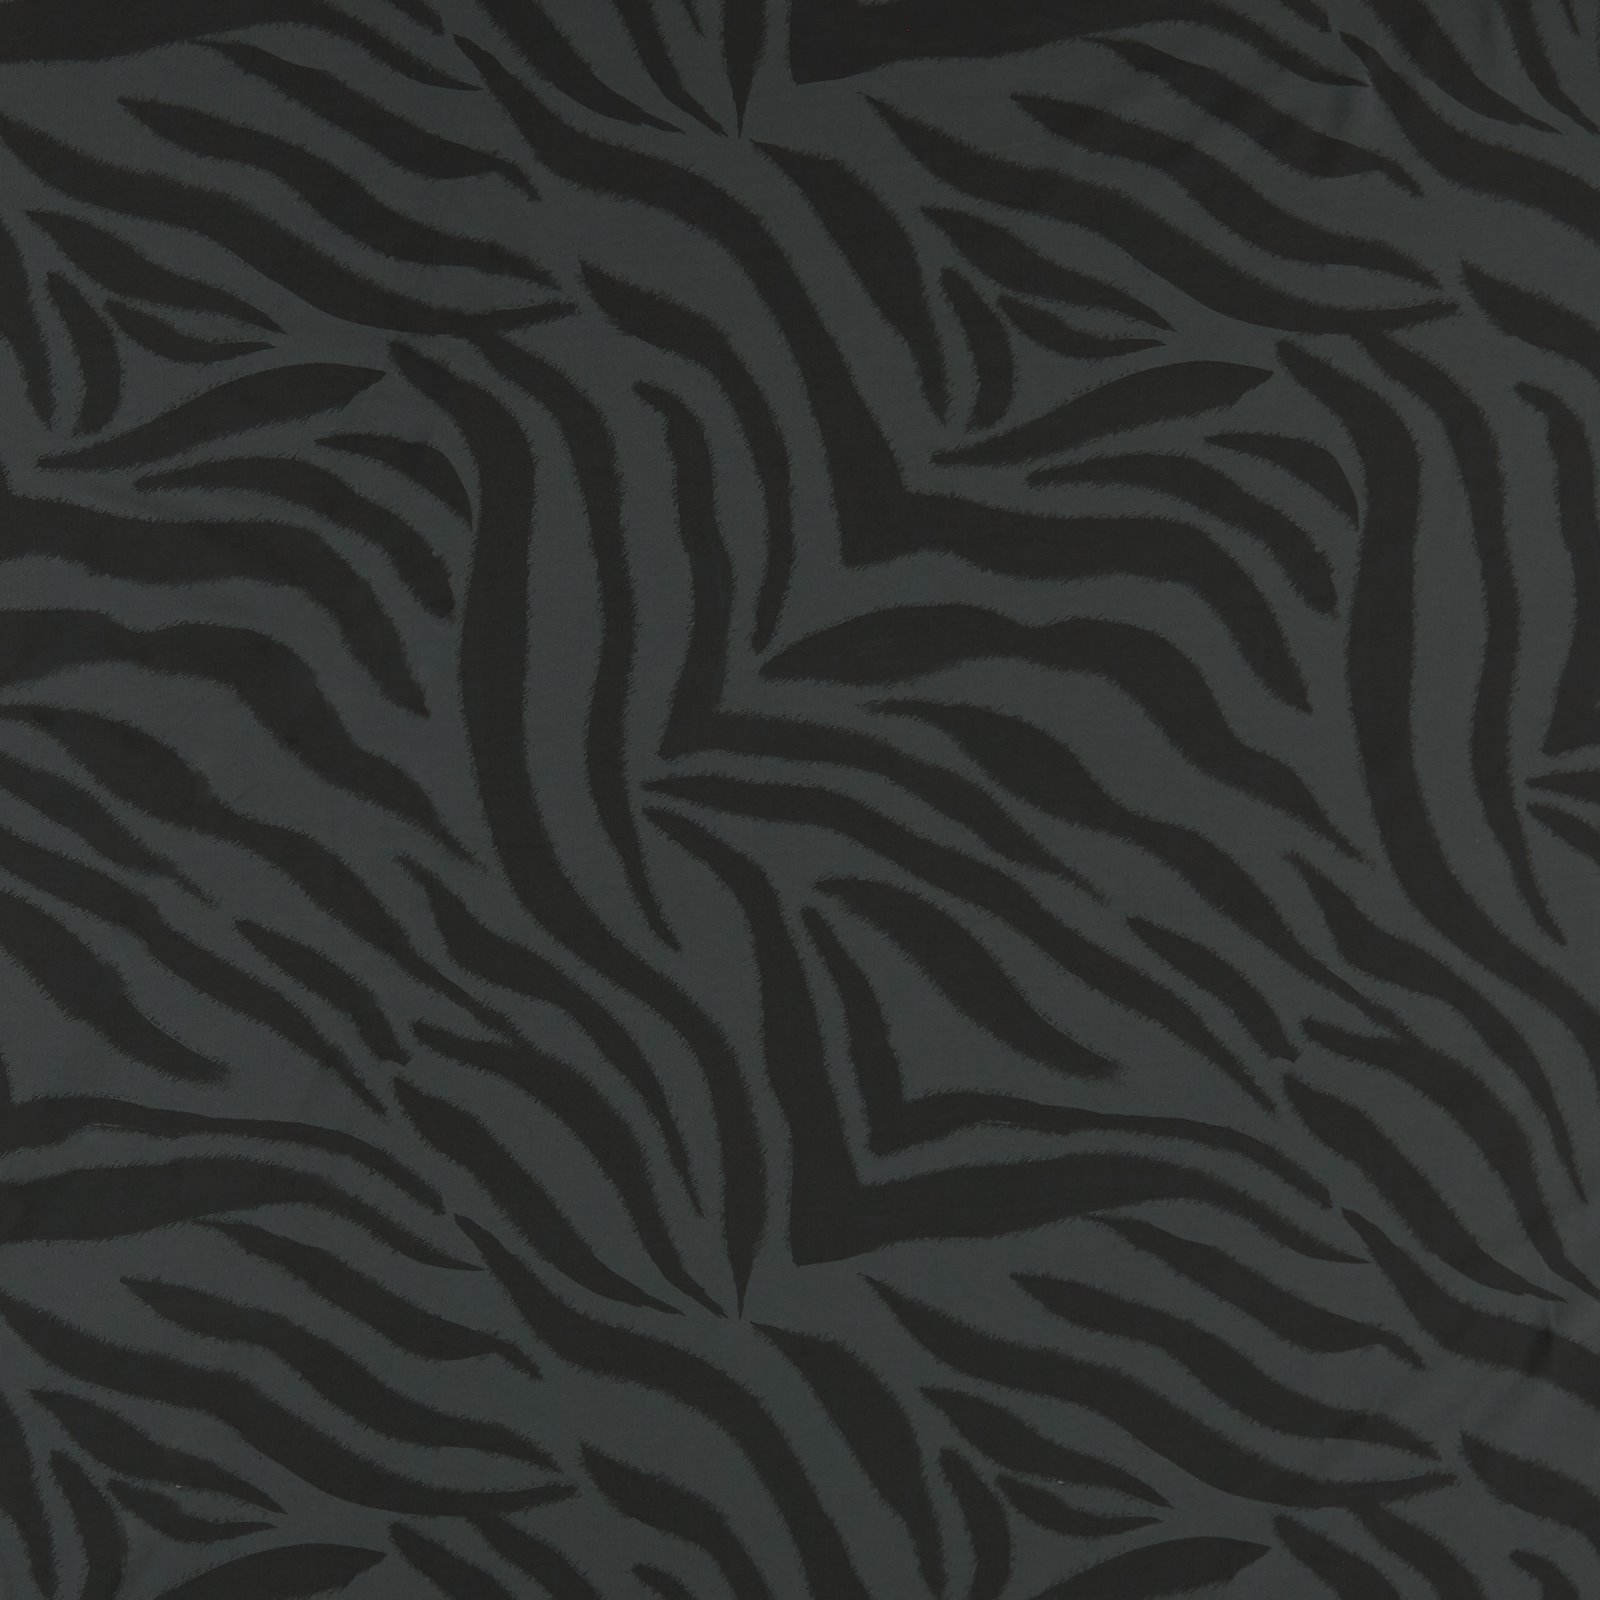 BCI str jersey mörkgrå m zebra ränder 273168_pack_sp